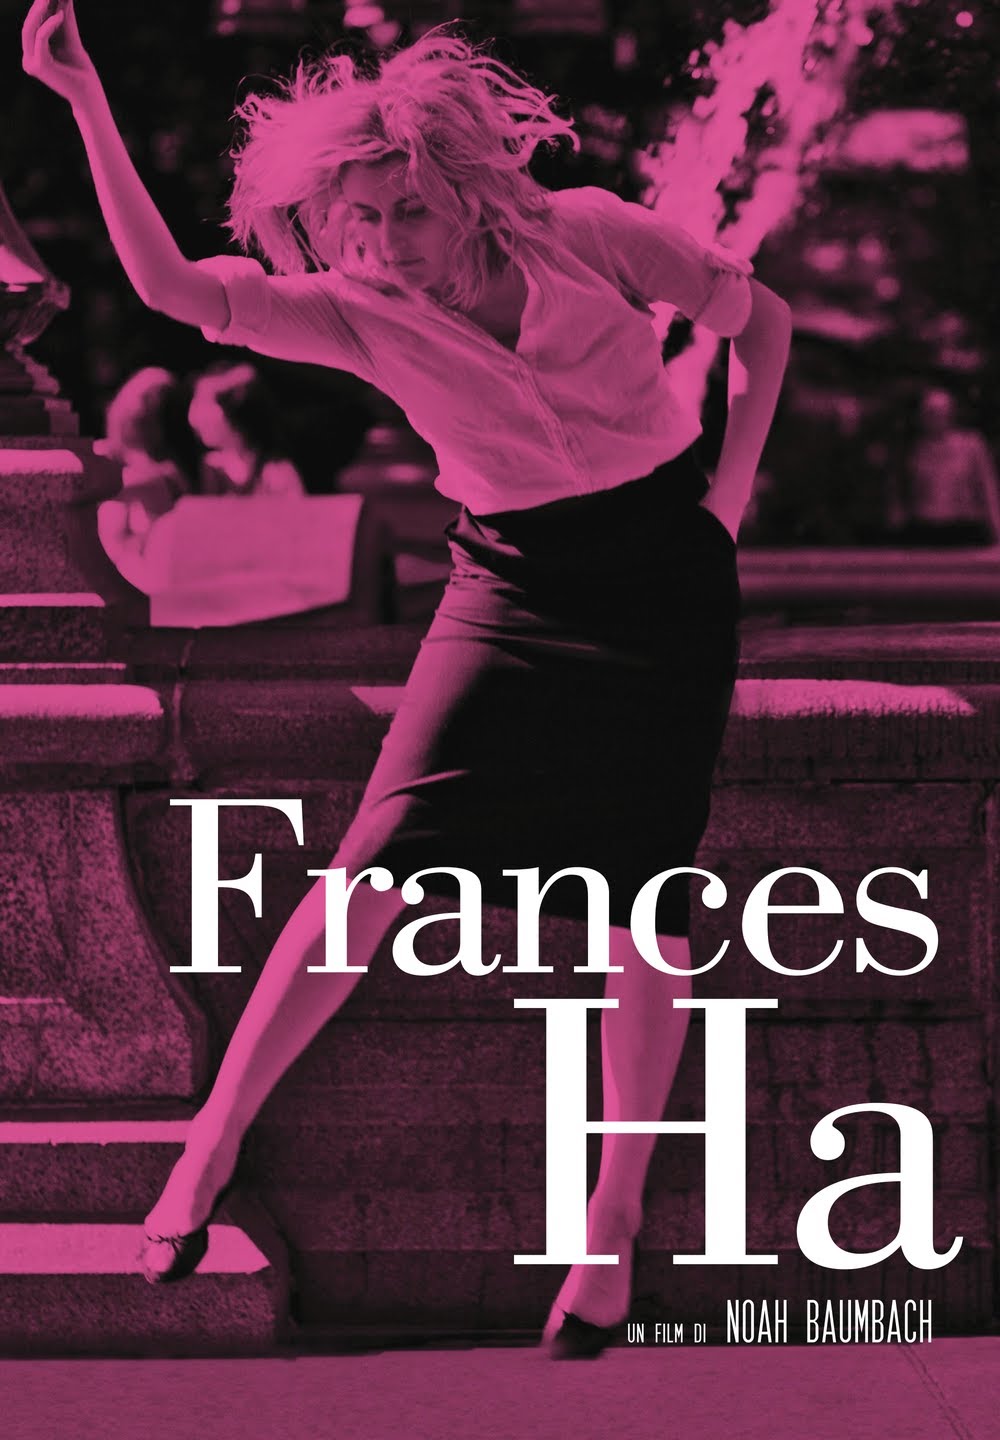 Frances Ha [B/N] [HD] (2014)